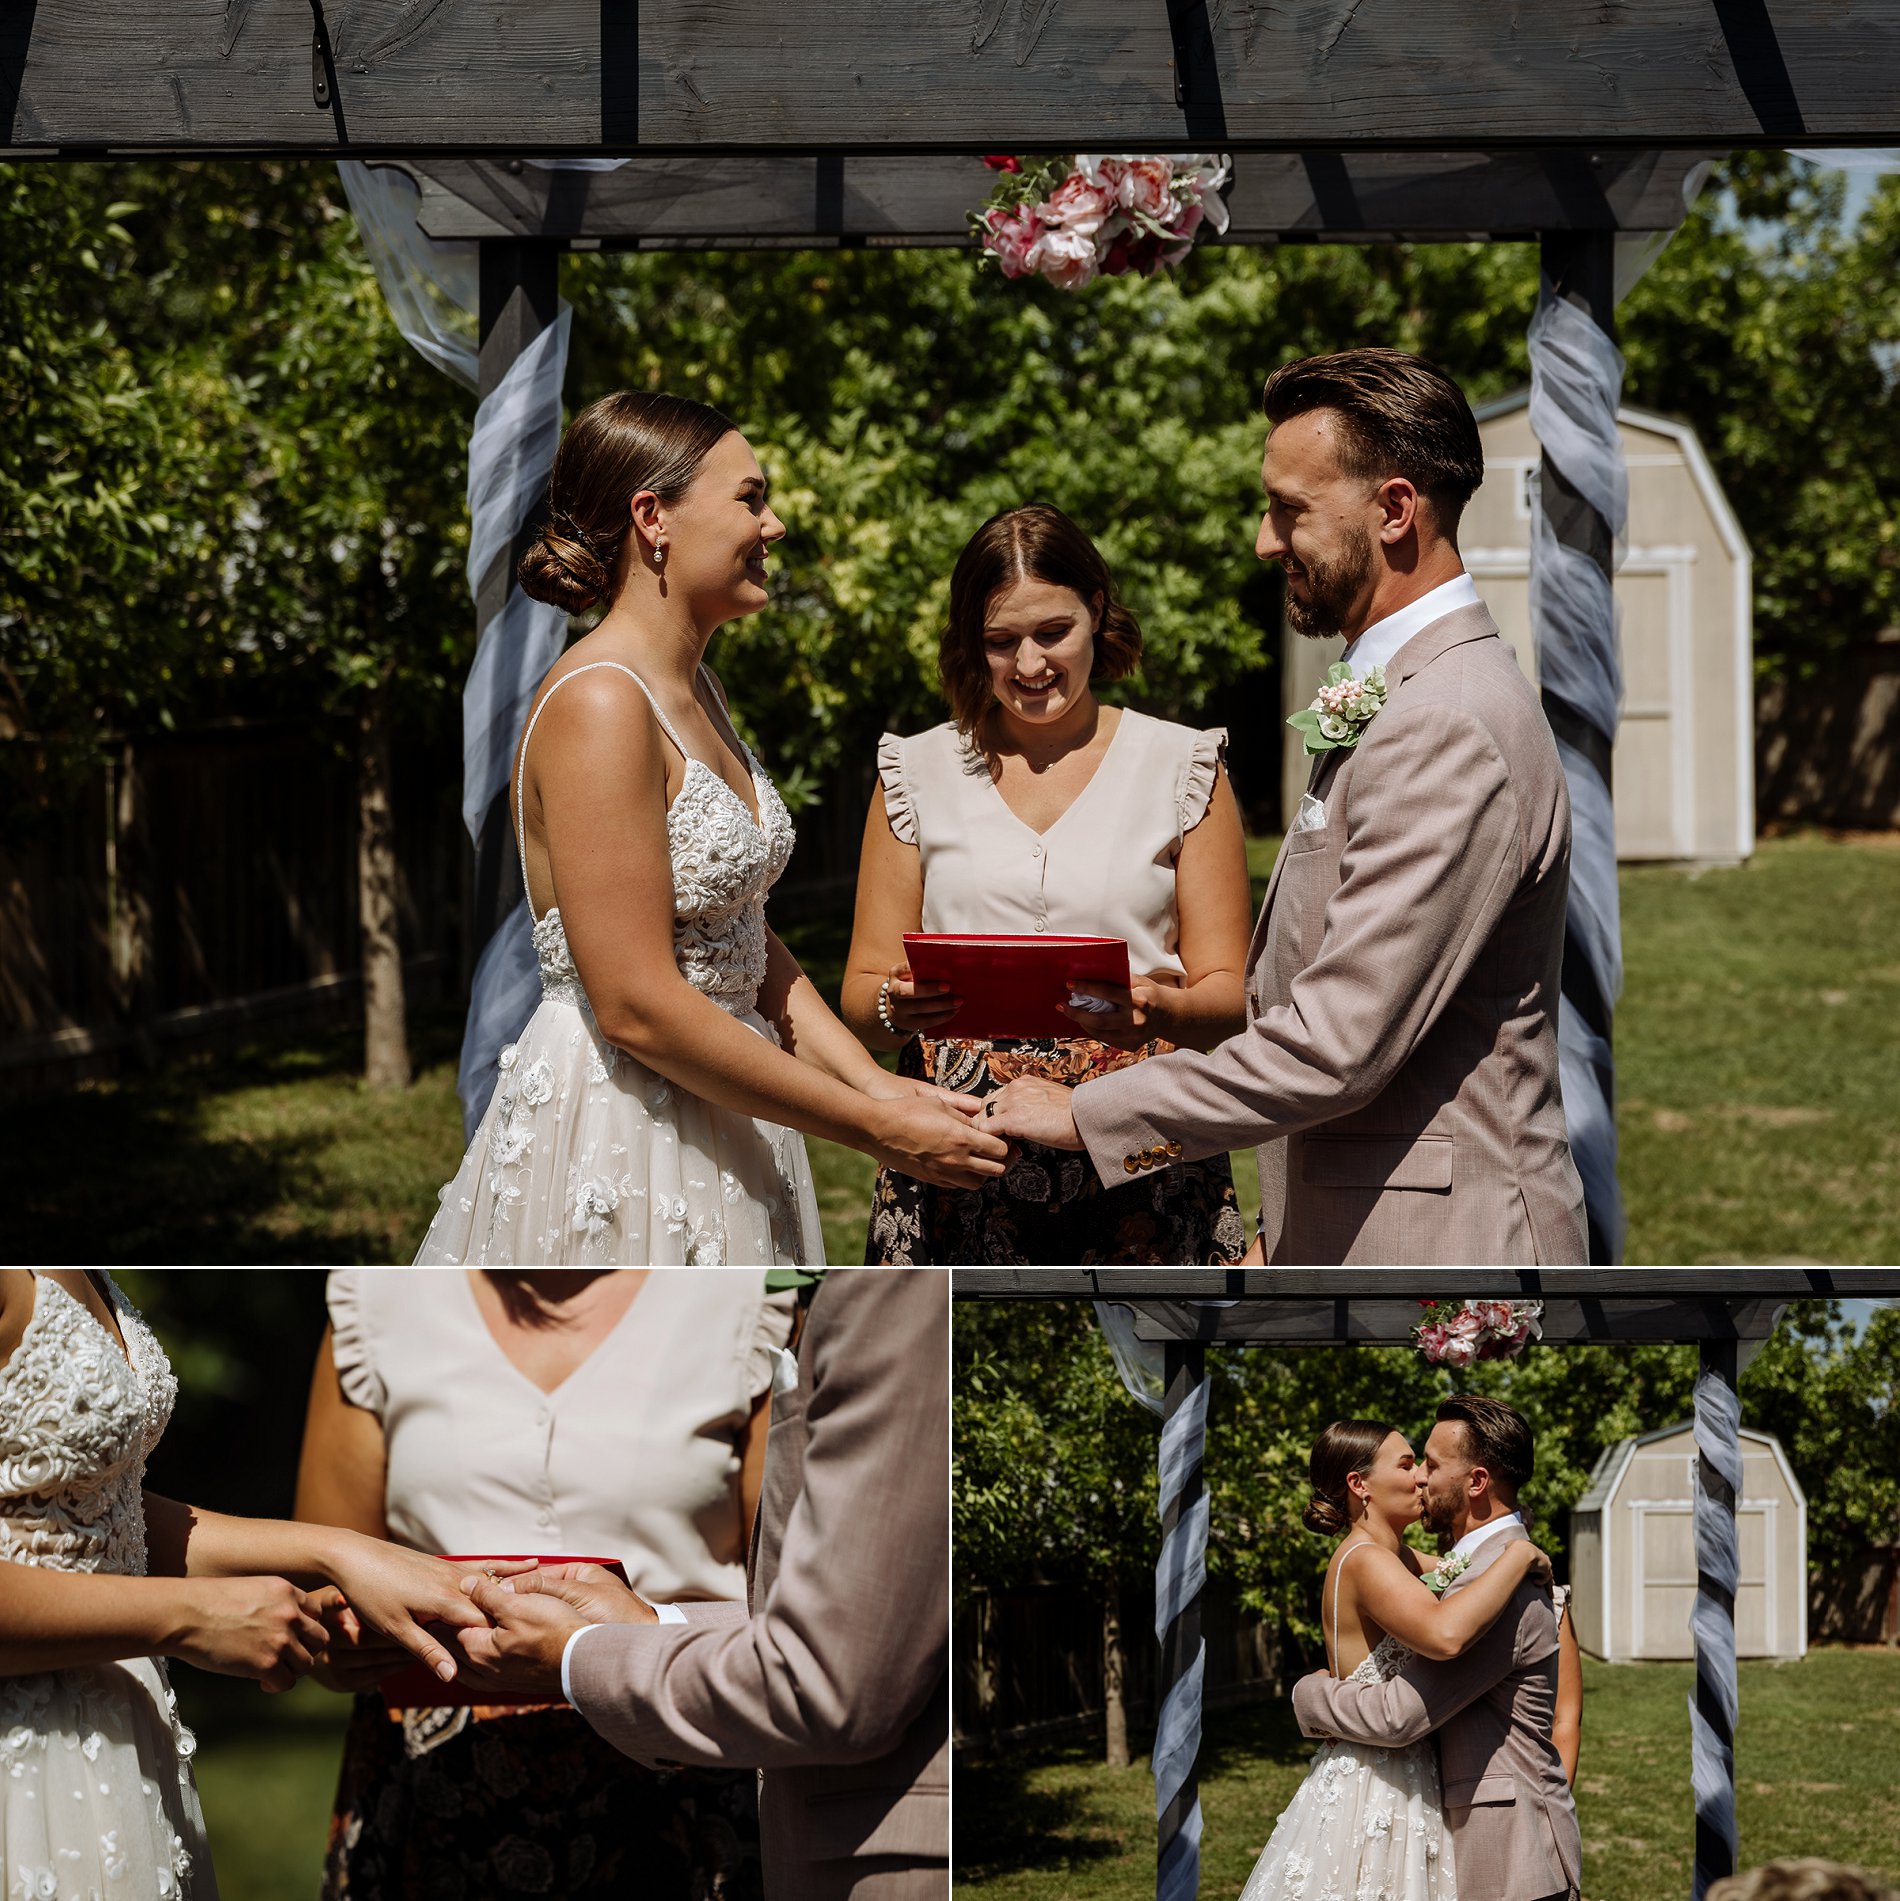 Saskatoon bride and groom share their first kiss at their backyard outdoor wedding ceremony.